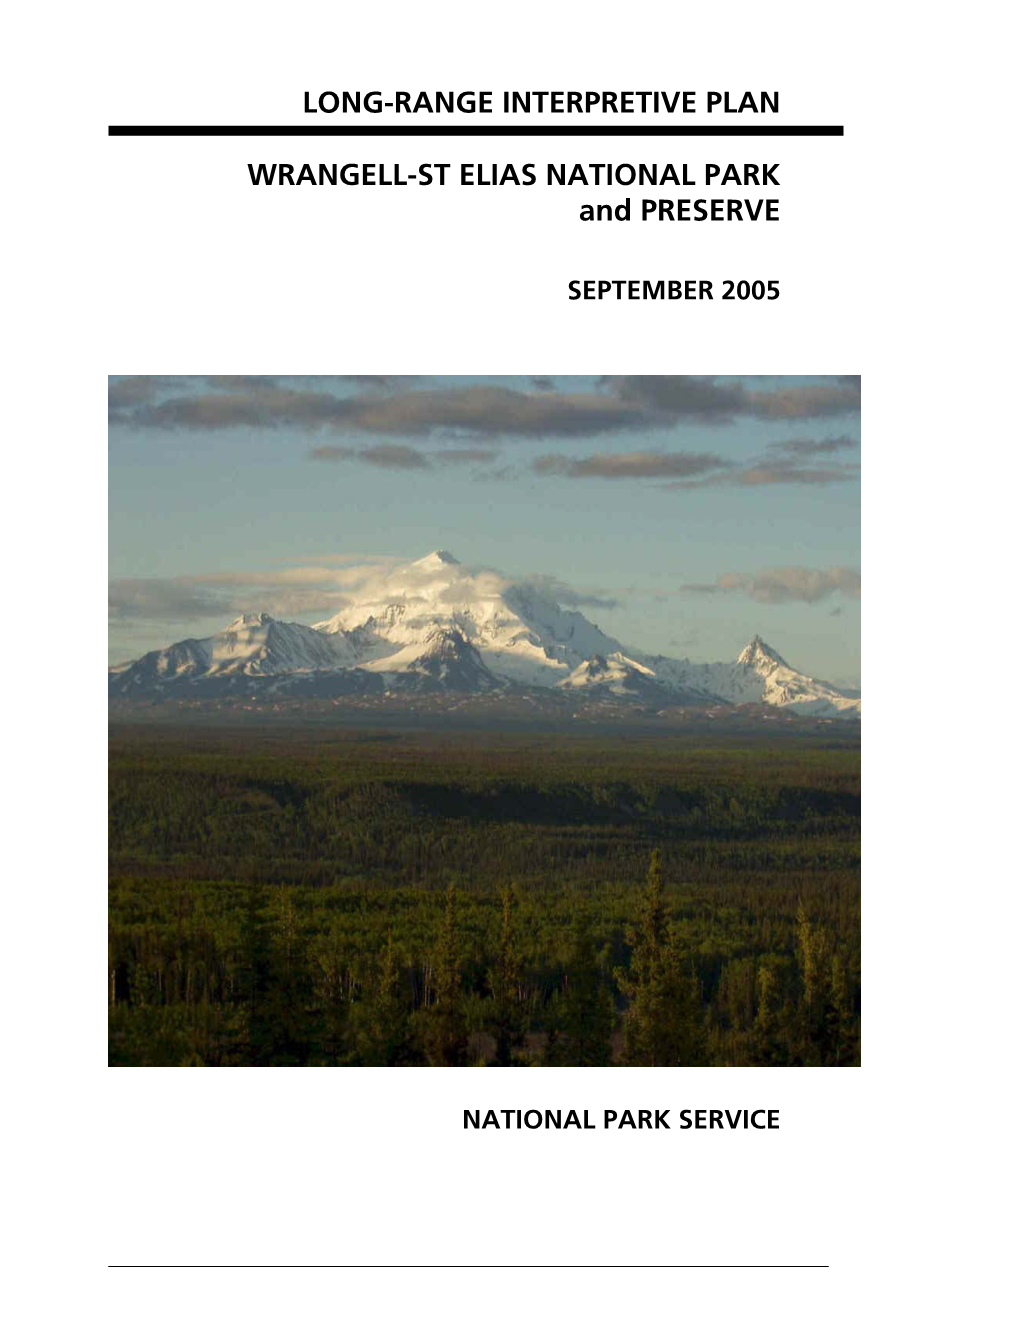 Long-Range Interpretive Plan, Wrangell-St. Elias National Park and Preserve